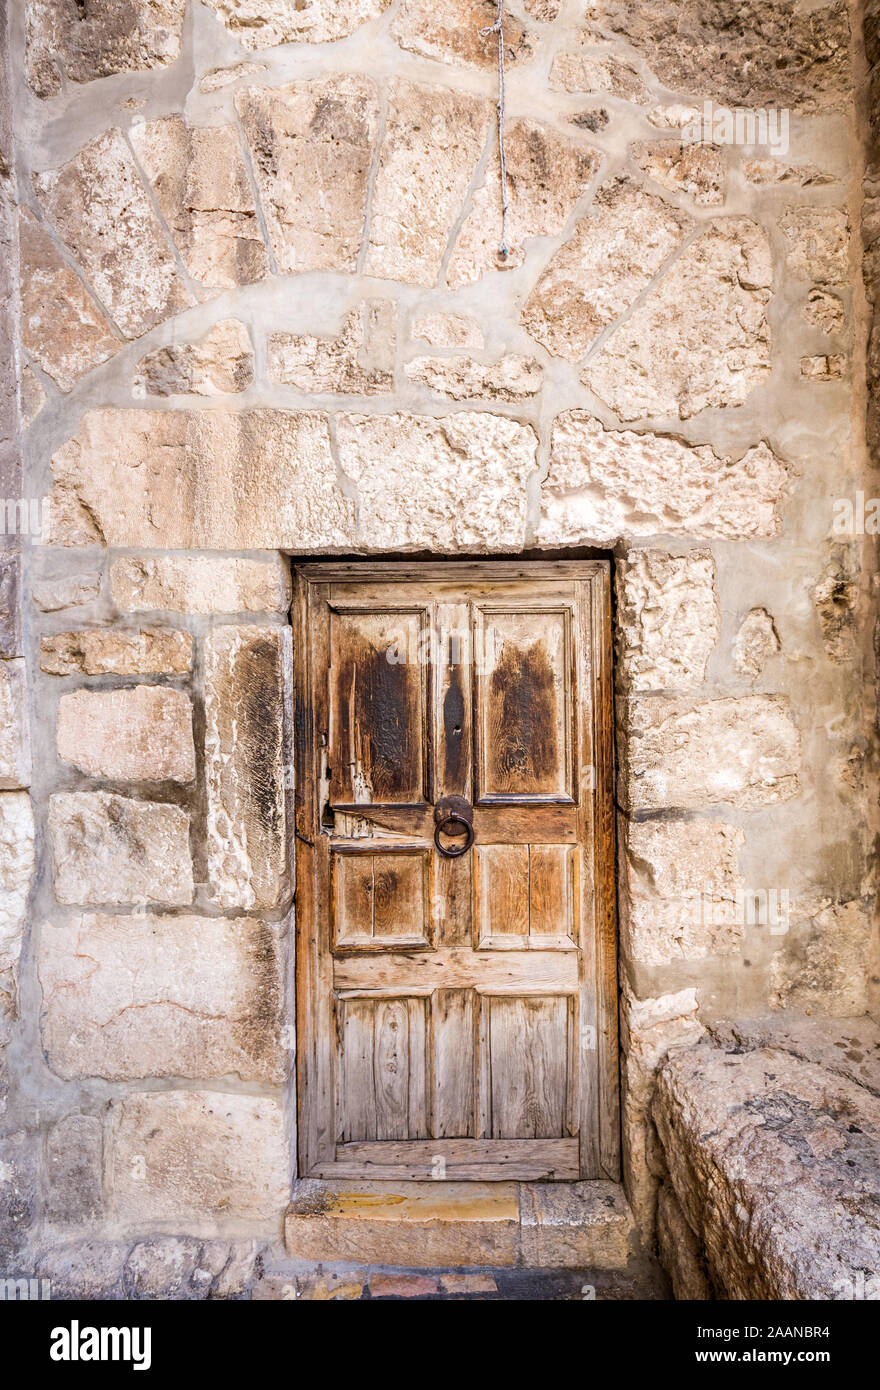 Ancient wooden door and stone walls in Jerusalem, Israel. Stock Photo